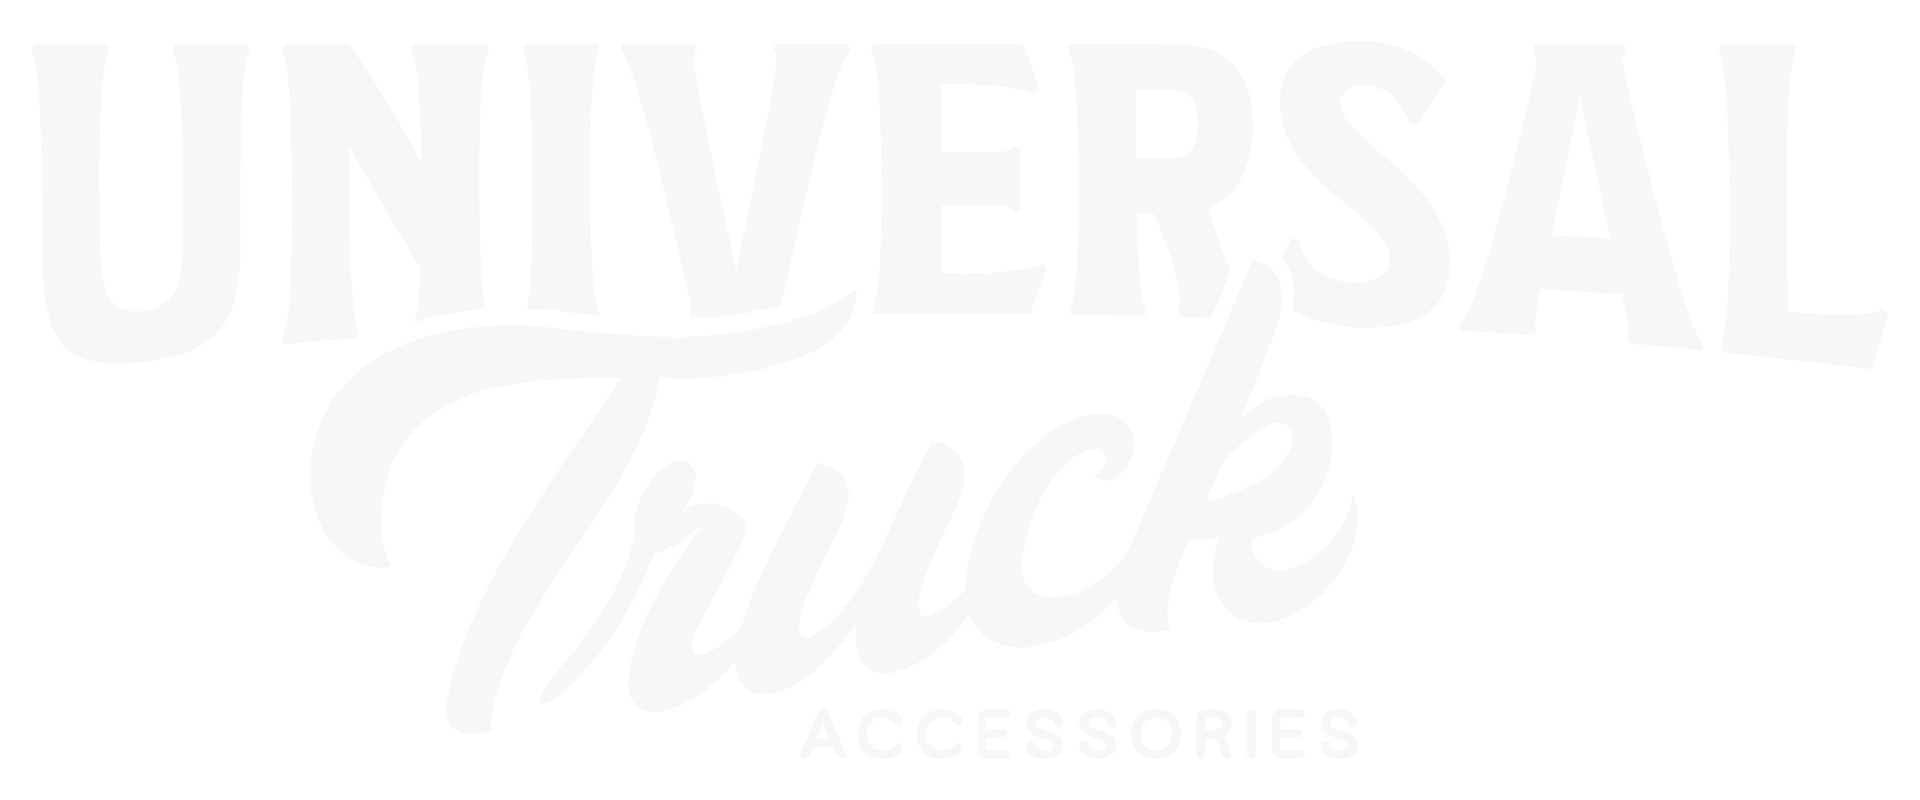 Universal Truck Accessories